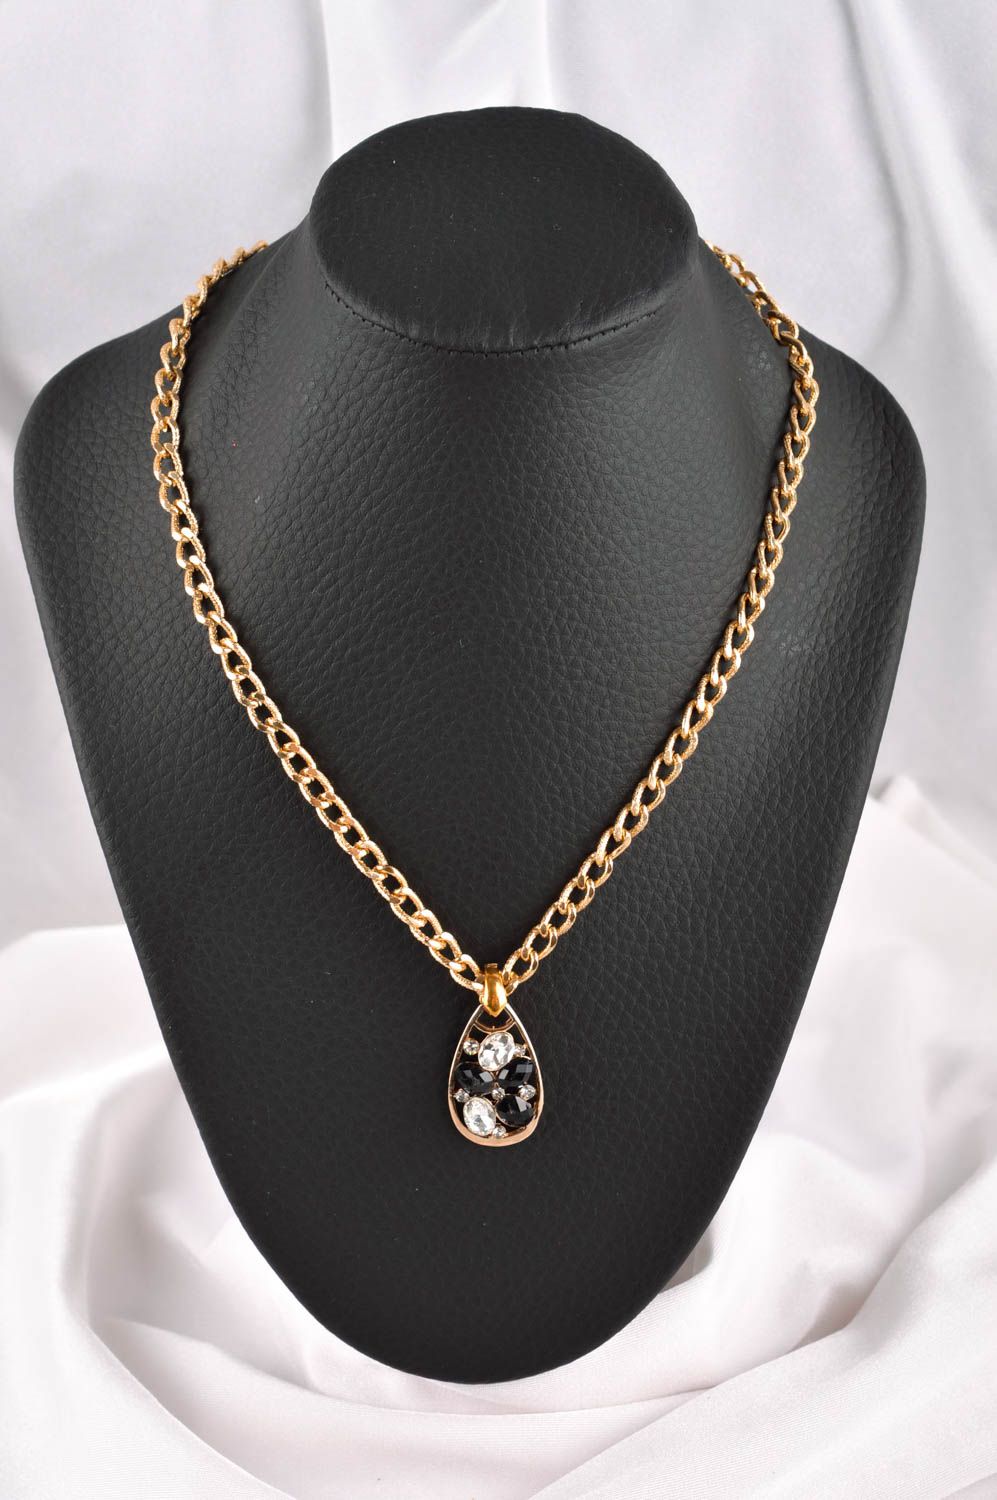 Handmade jewelry pendant necklace unique jewelry fashion accessories for women photo 1